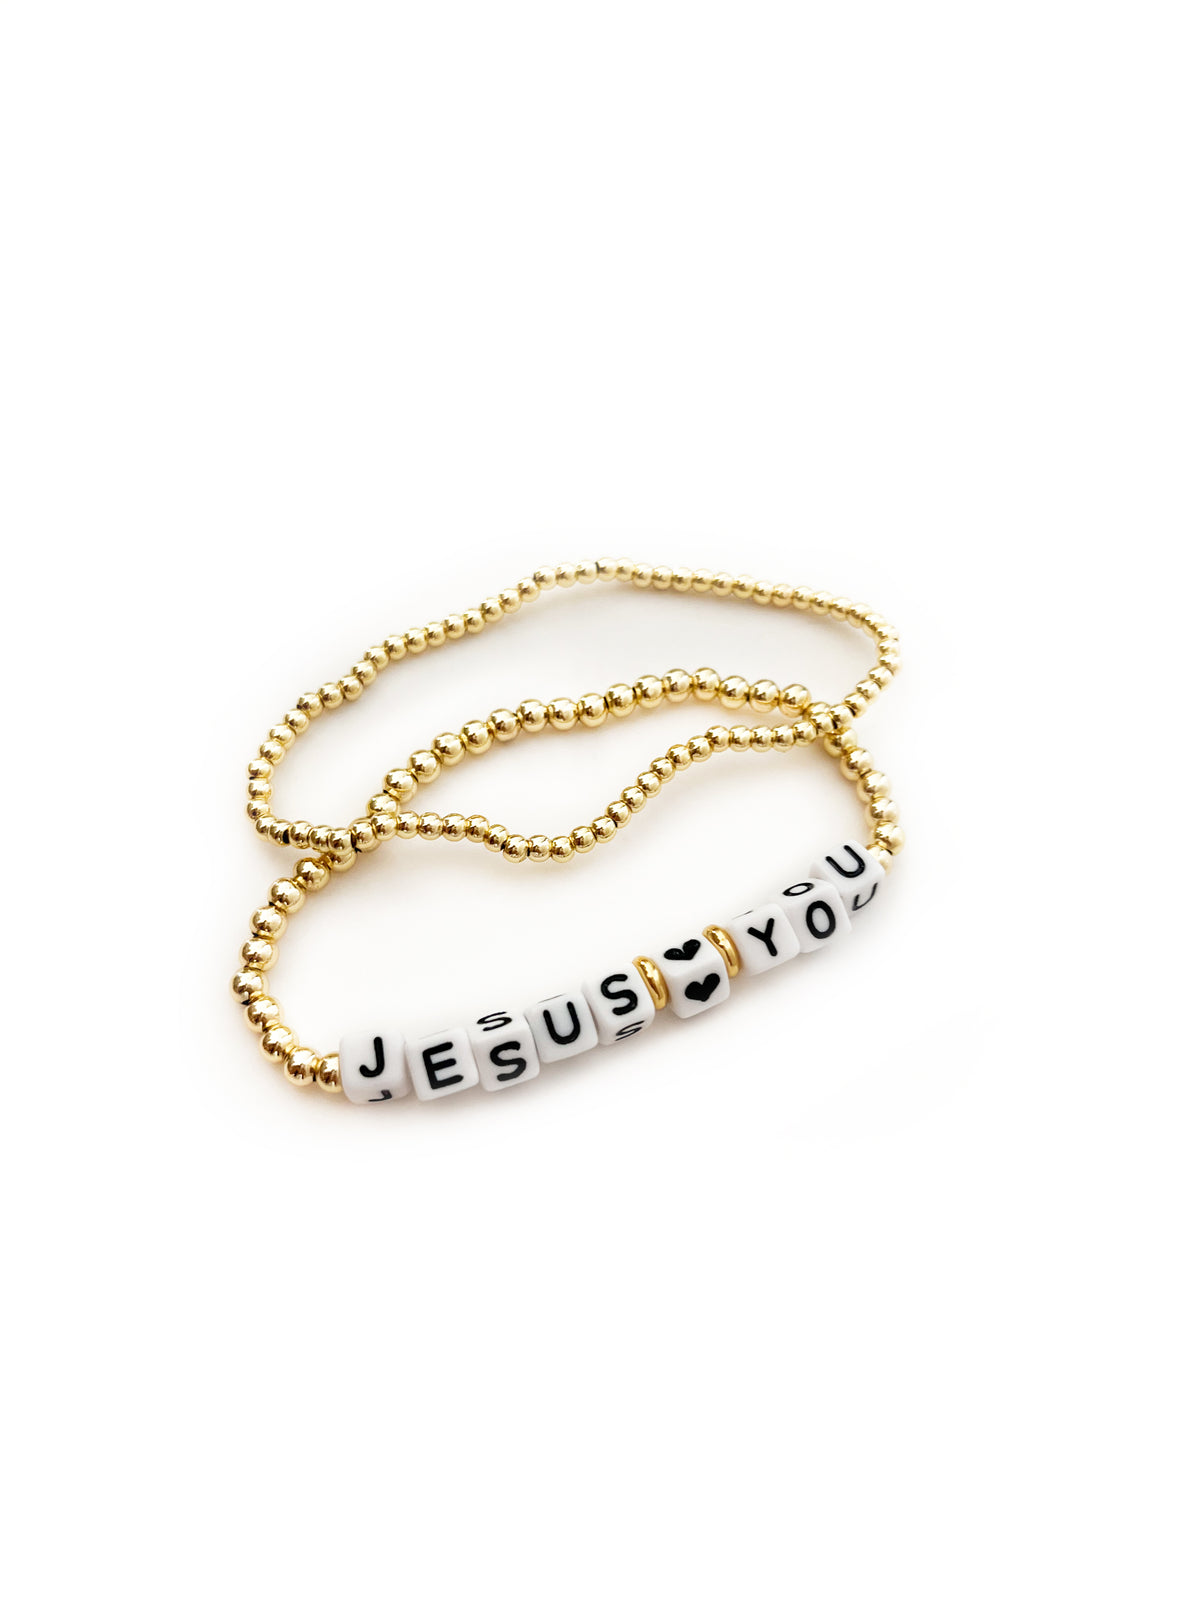 Jesus Loves You Bead Bracelets